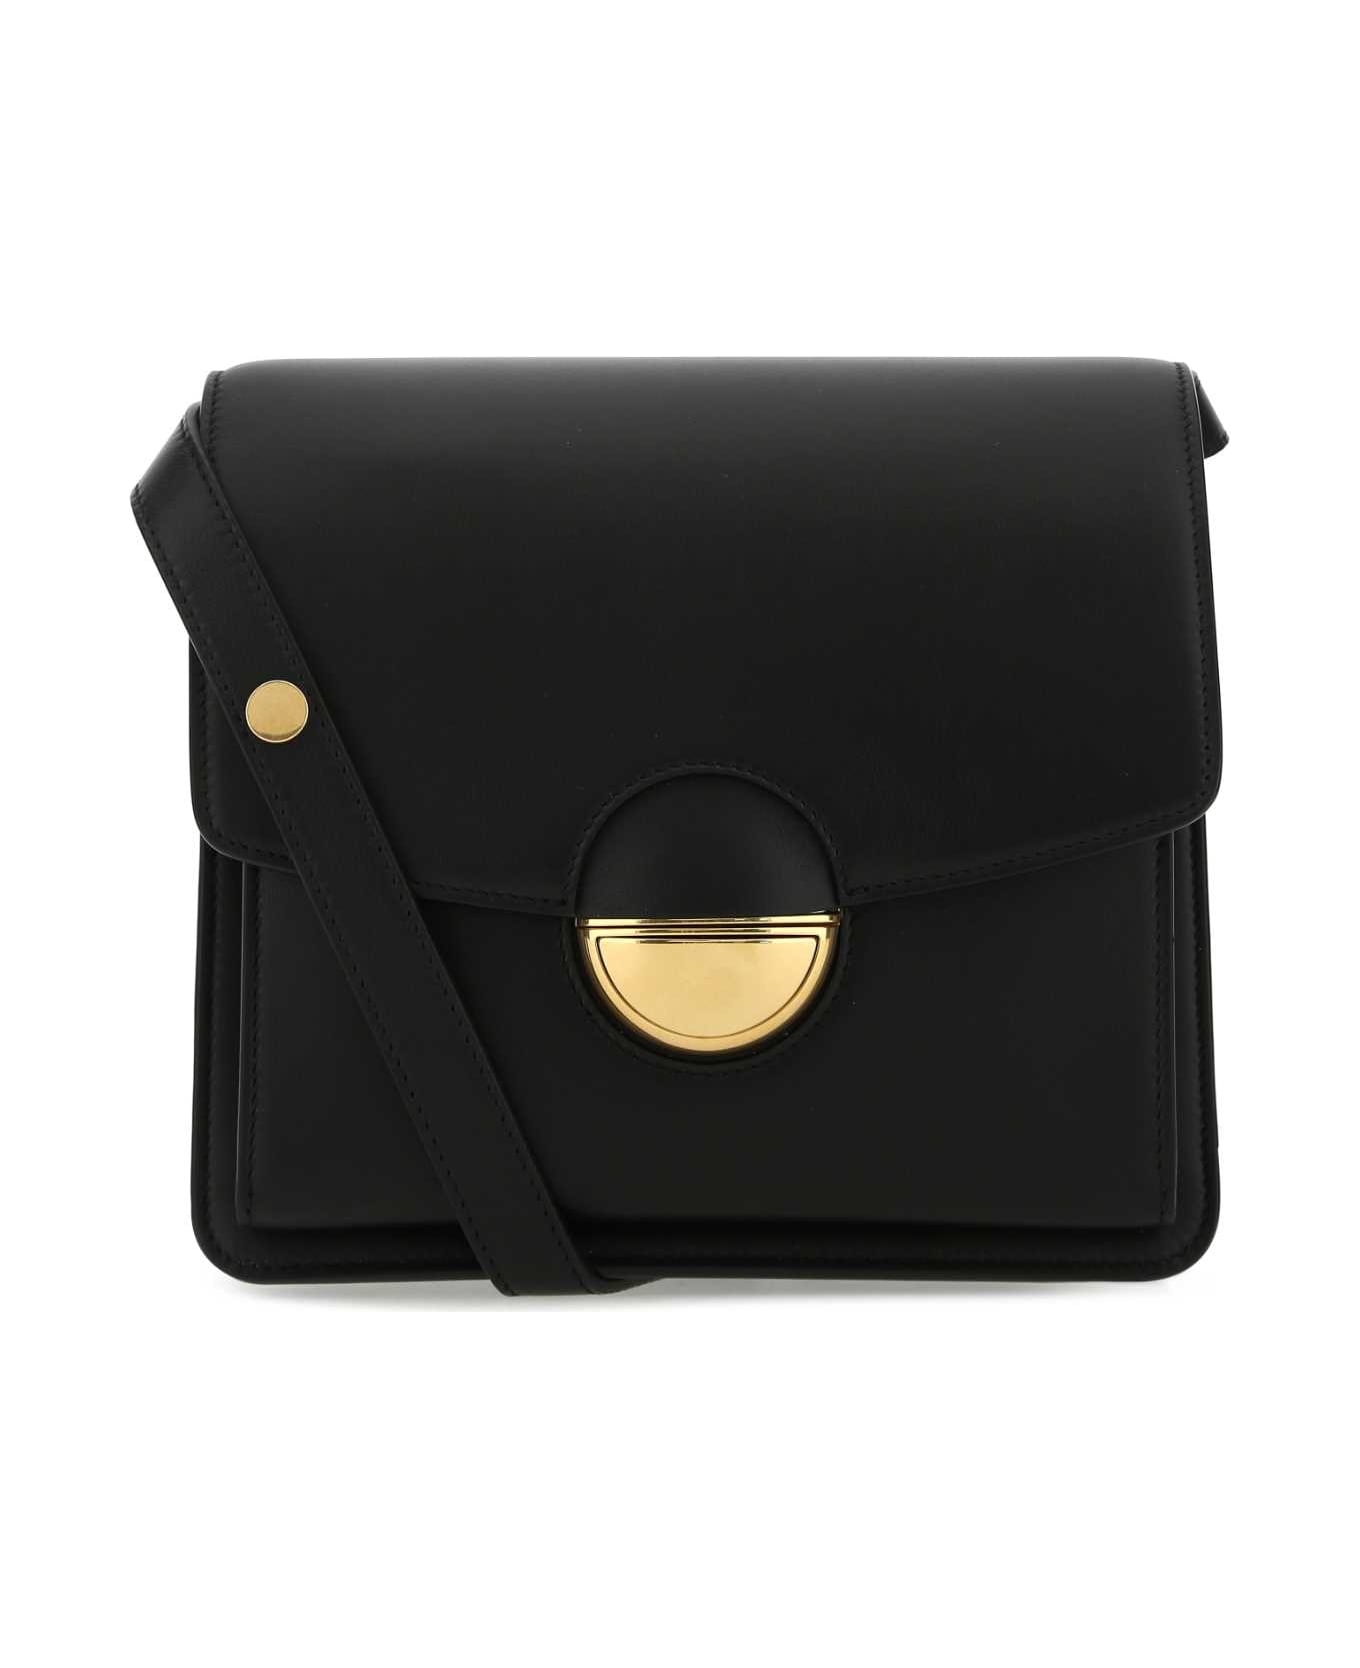 Proenza Schouler Black Leather Dia Shoulder Bag - 001